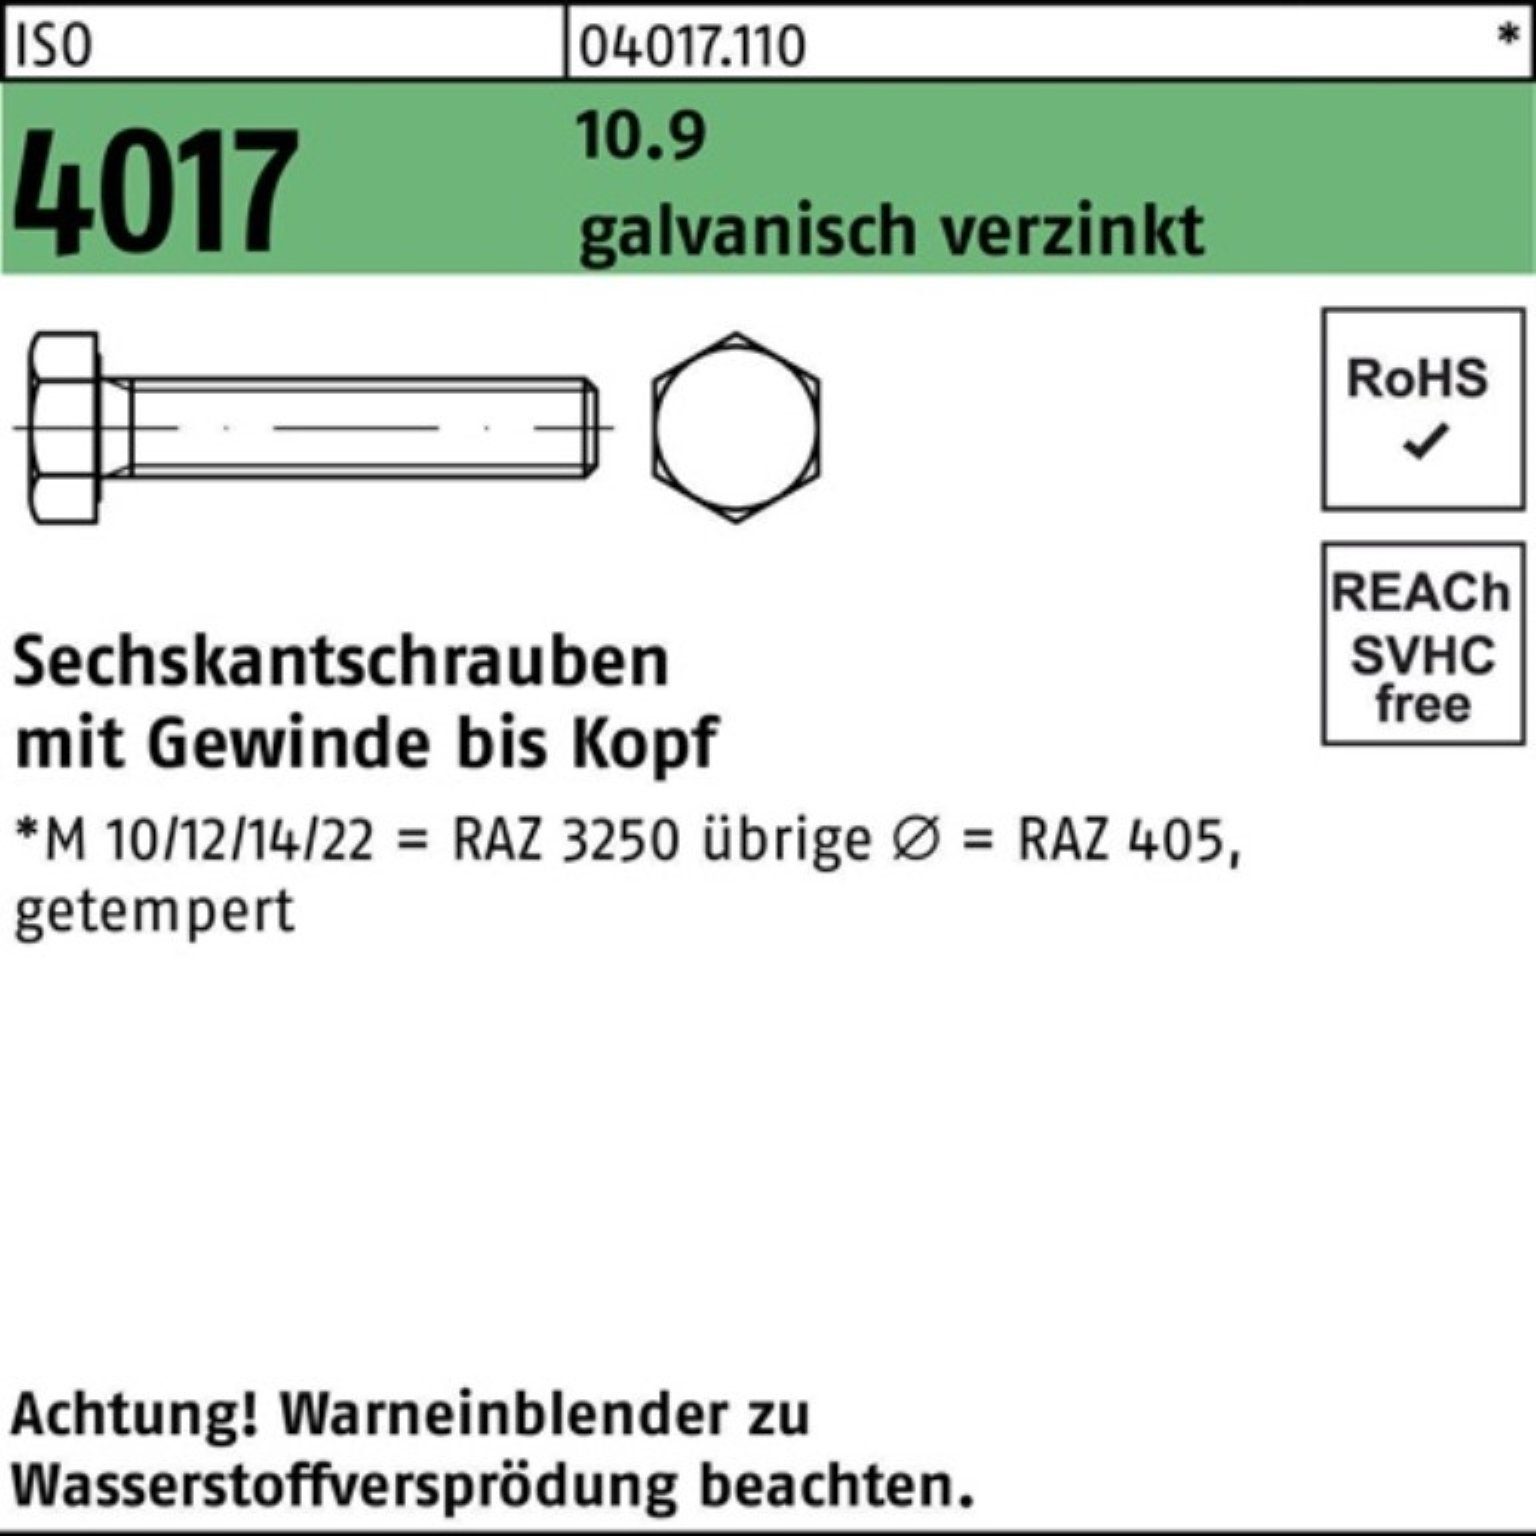 Bufab Sechskantschraube 100er Pack Sechskantschraube VG 50 S 4017 M12x 100 ISO galv.verz. 10.9